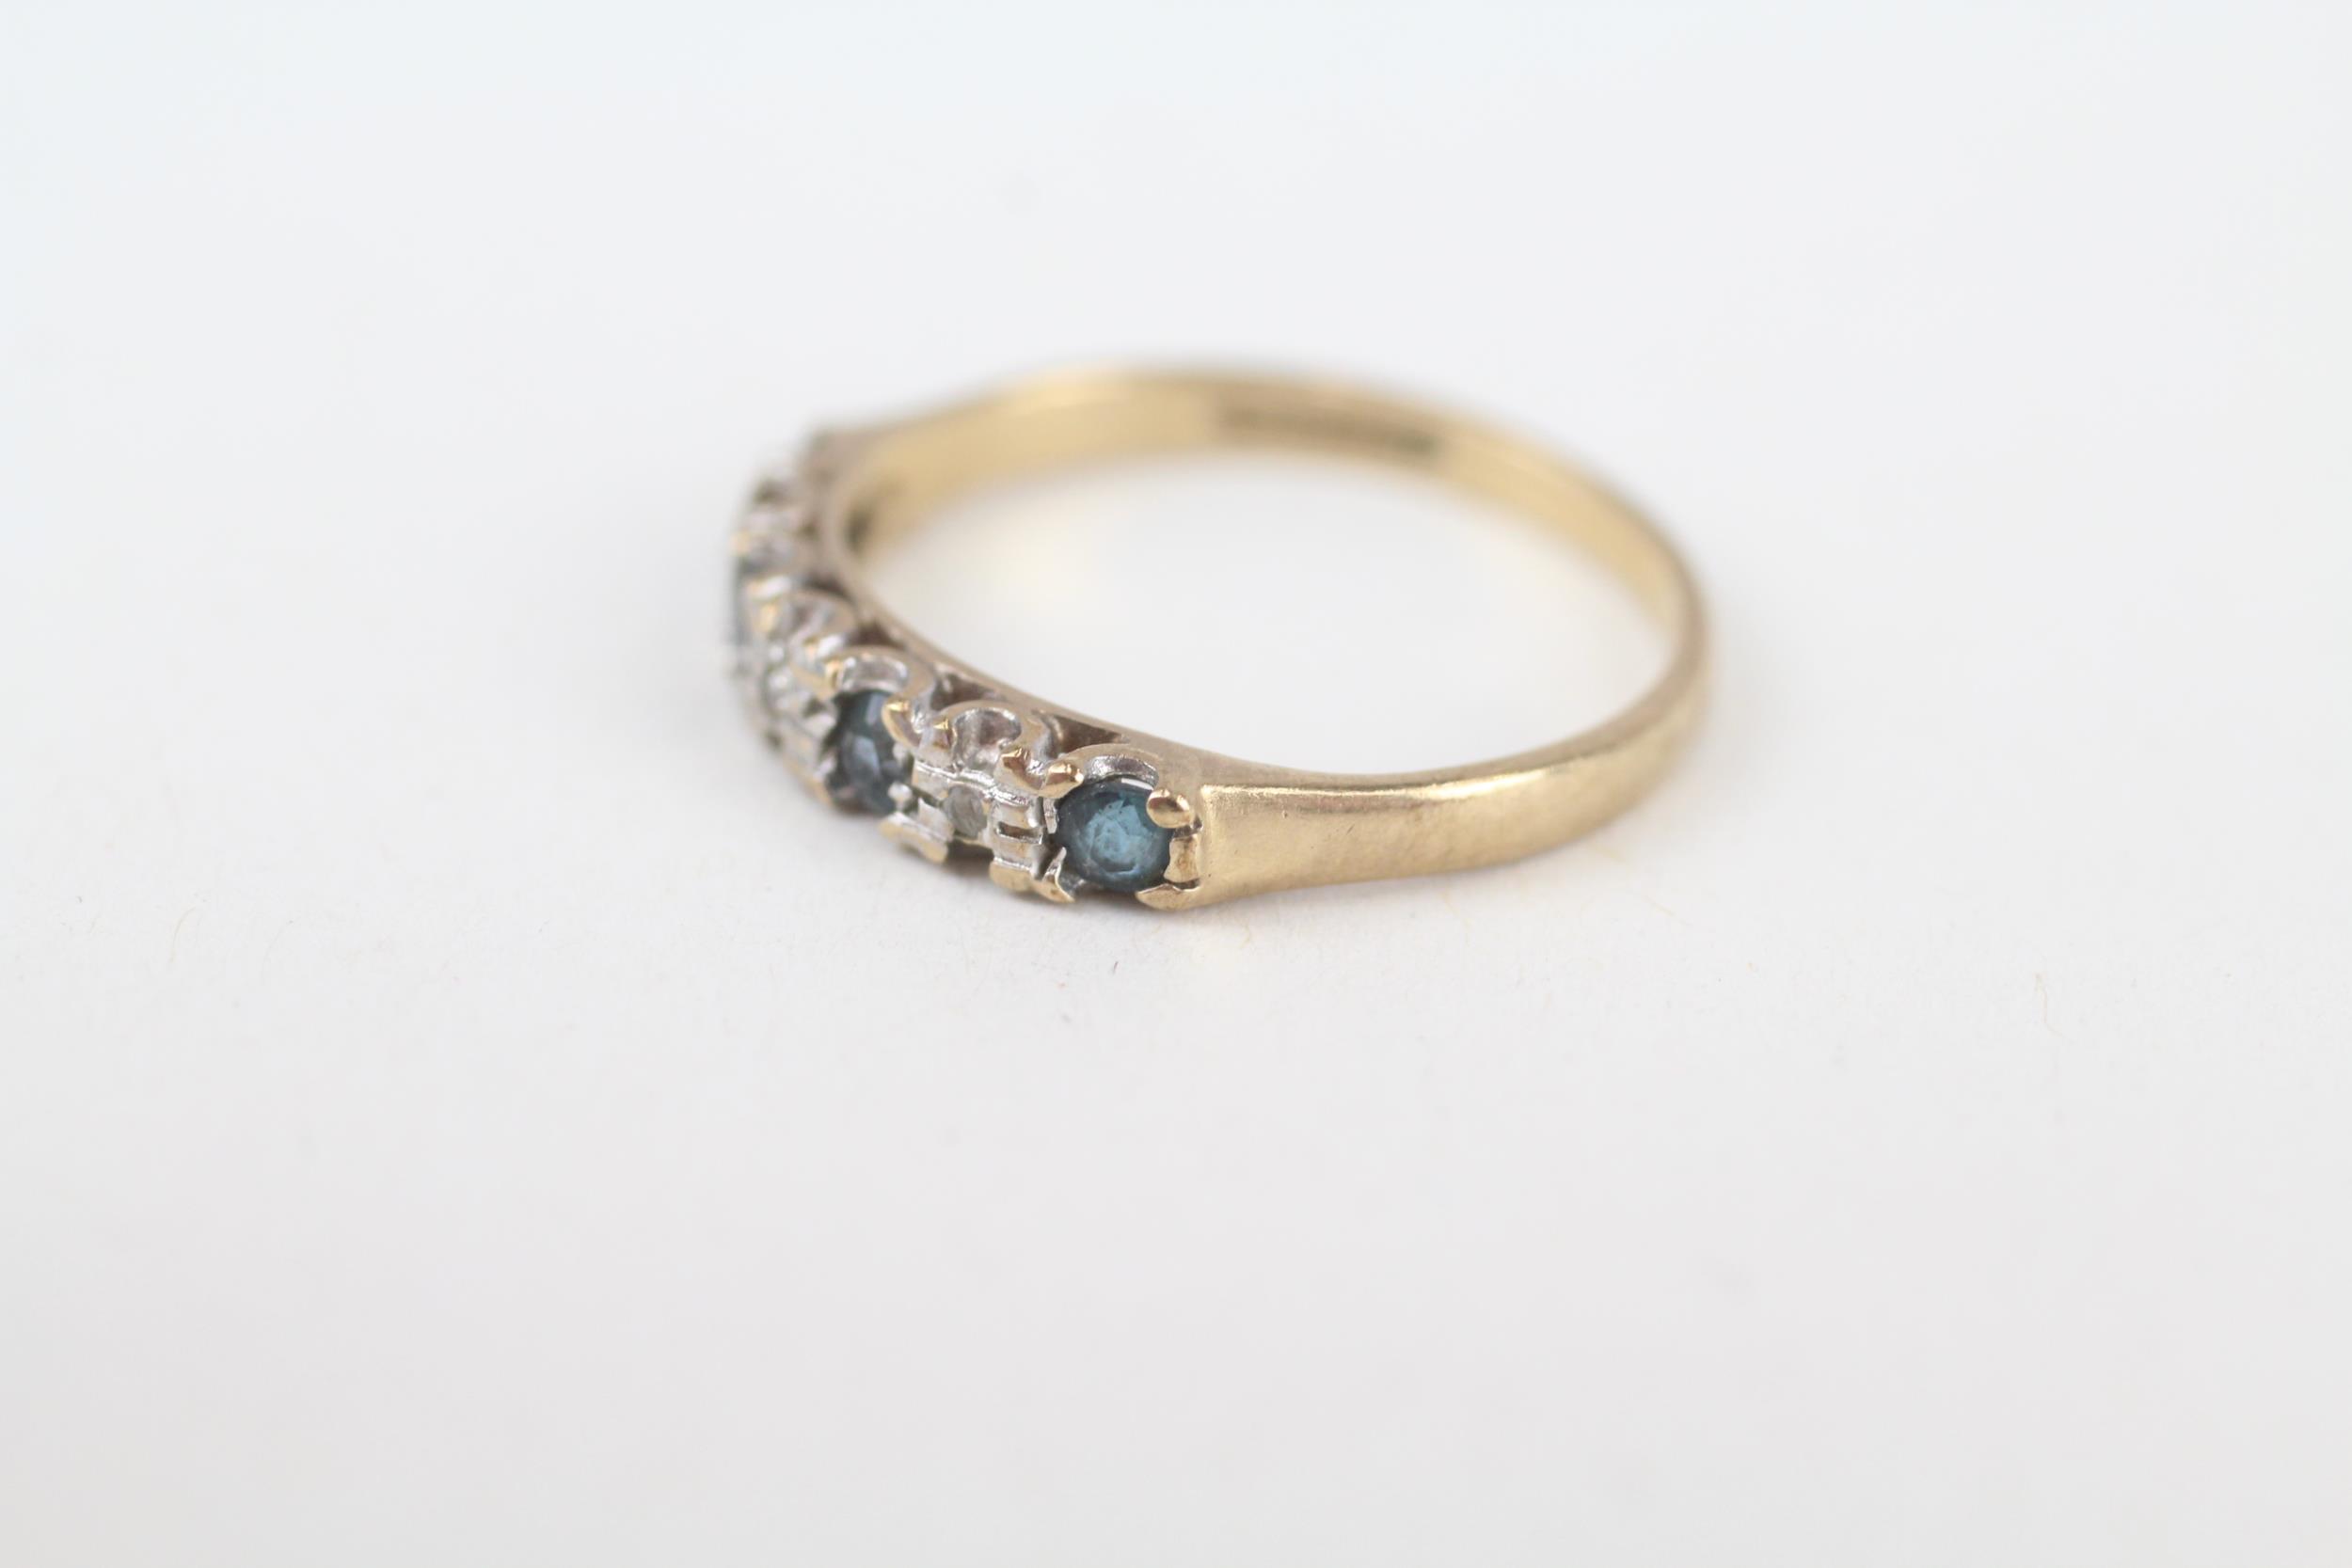 9ct gold diamond & topaz dress ring Size L 1/2 1.5 g - Image 4 of 5